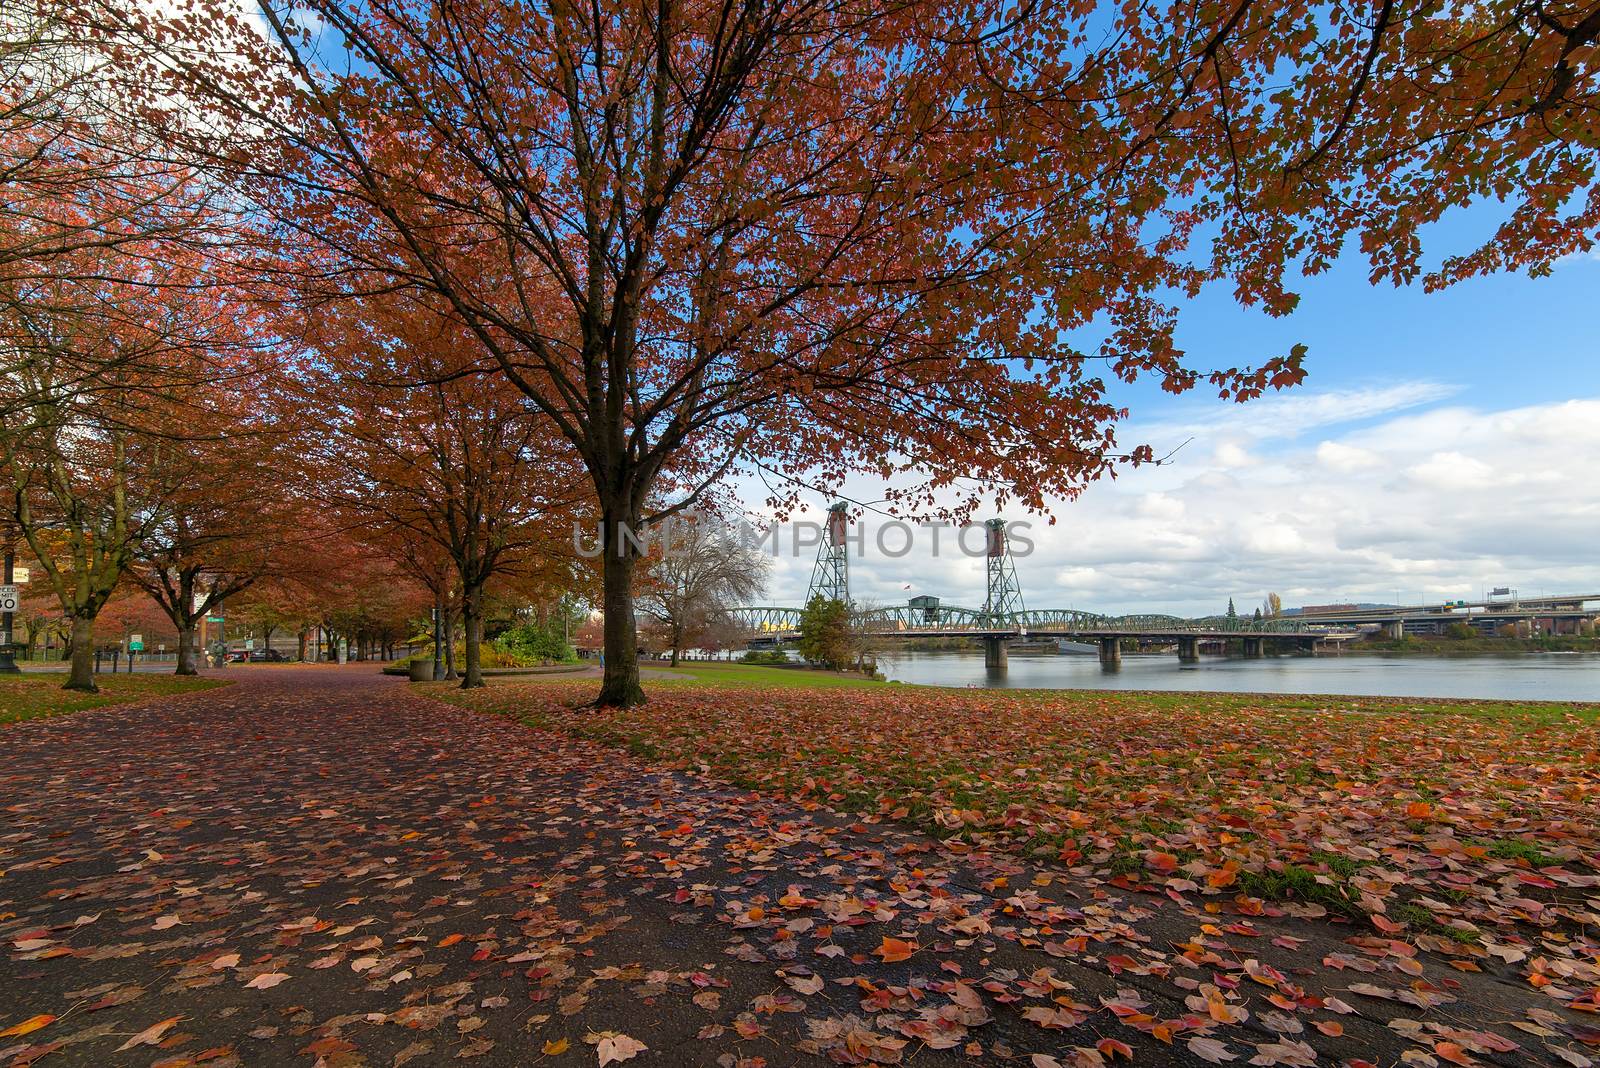 Portland Oregon Waterfron Park in Autumn by jpldesigns